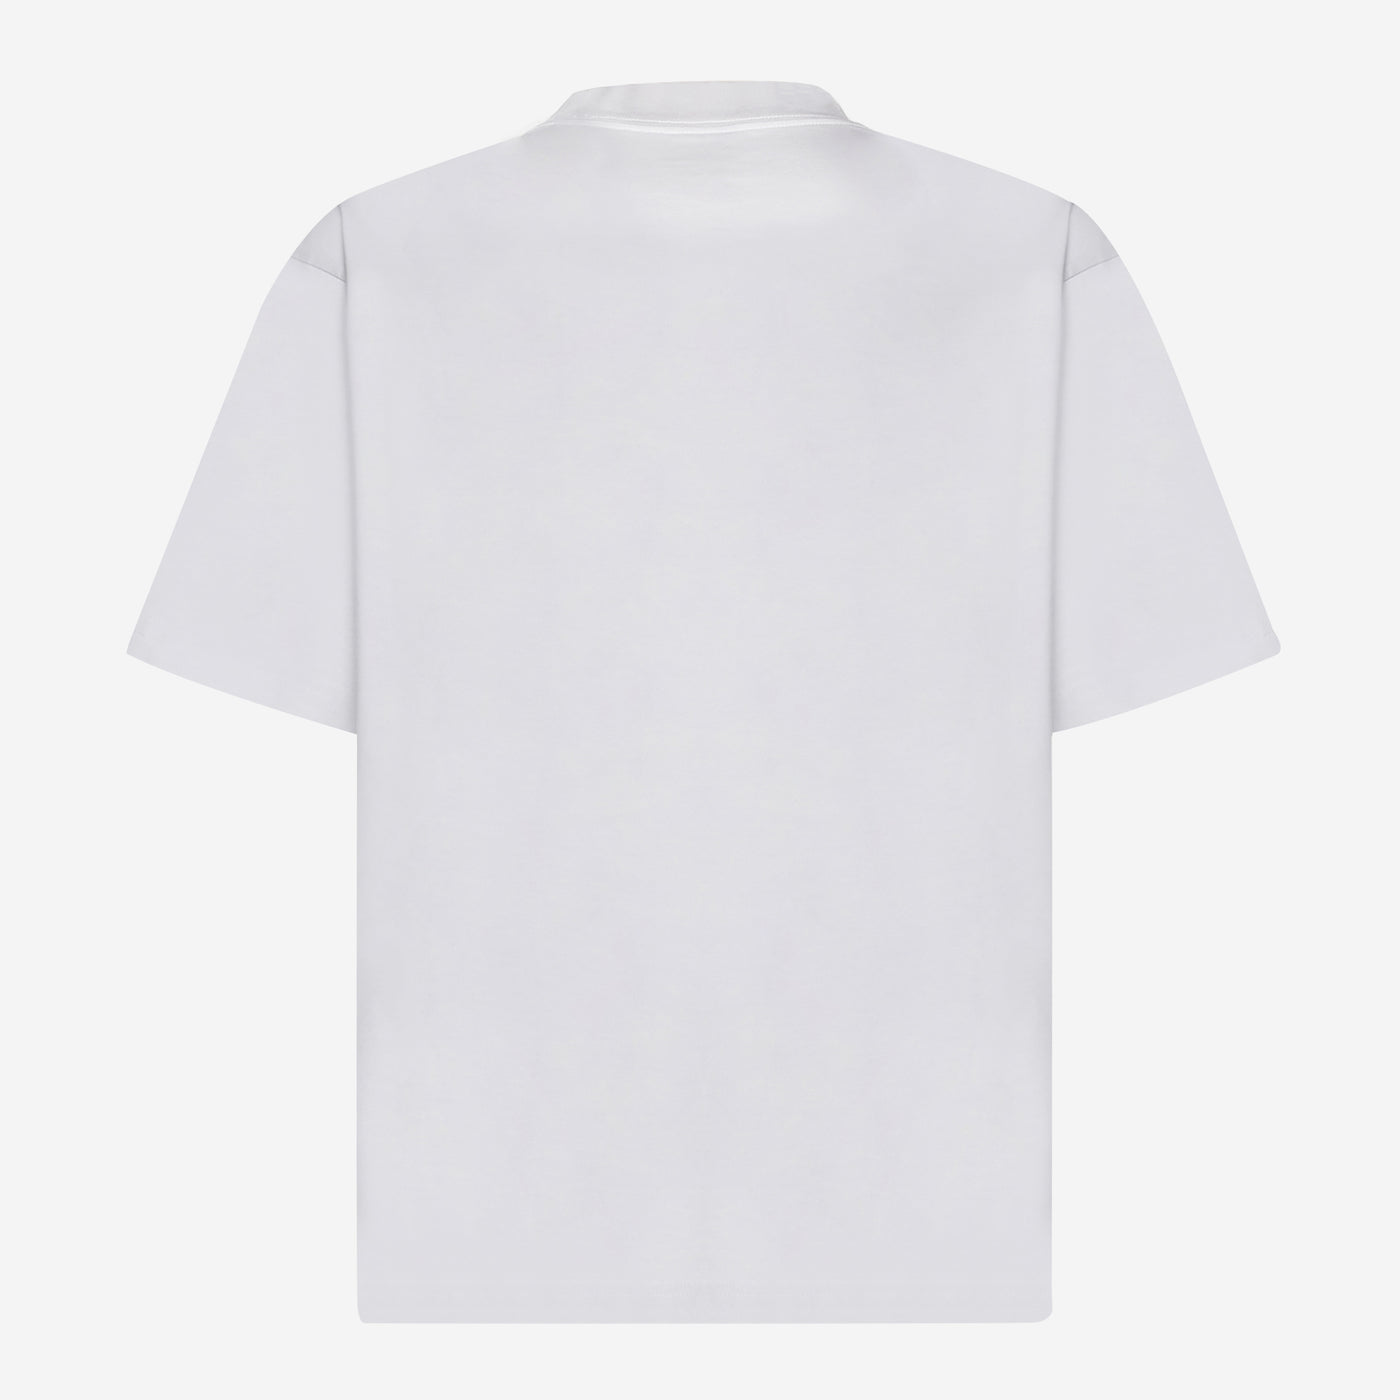 Balenciaga Mirror T-Shirt